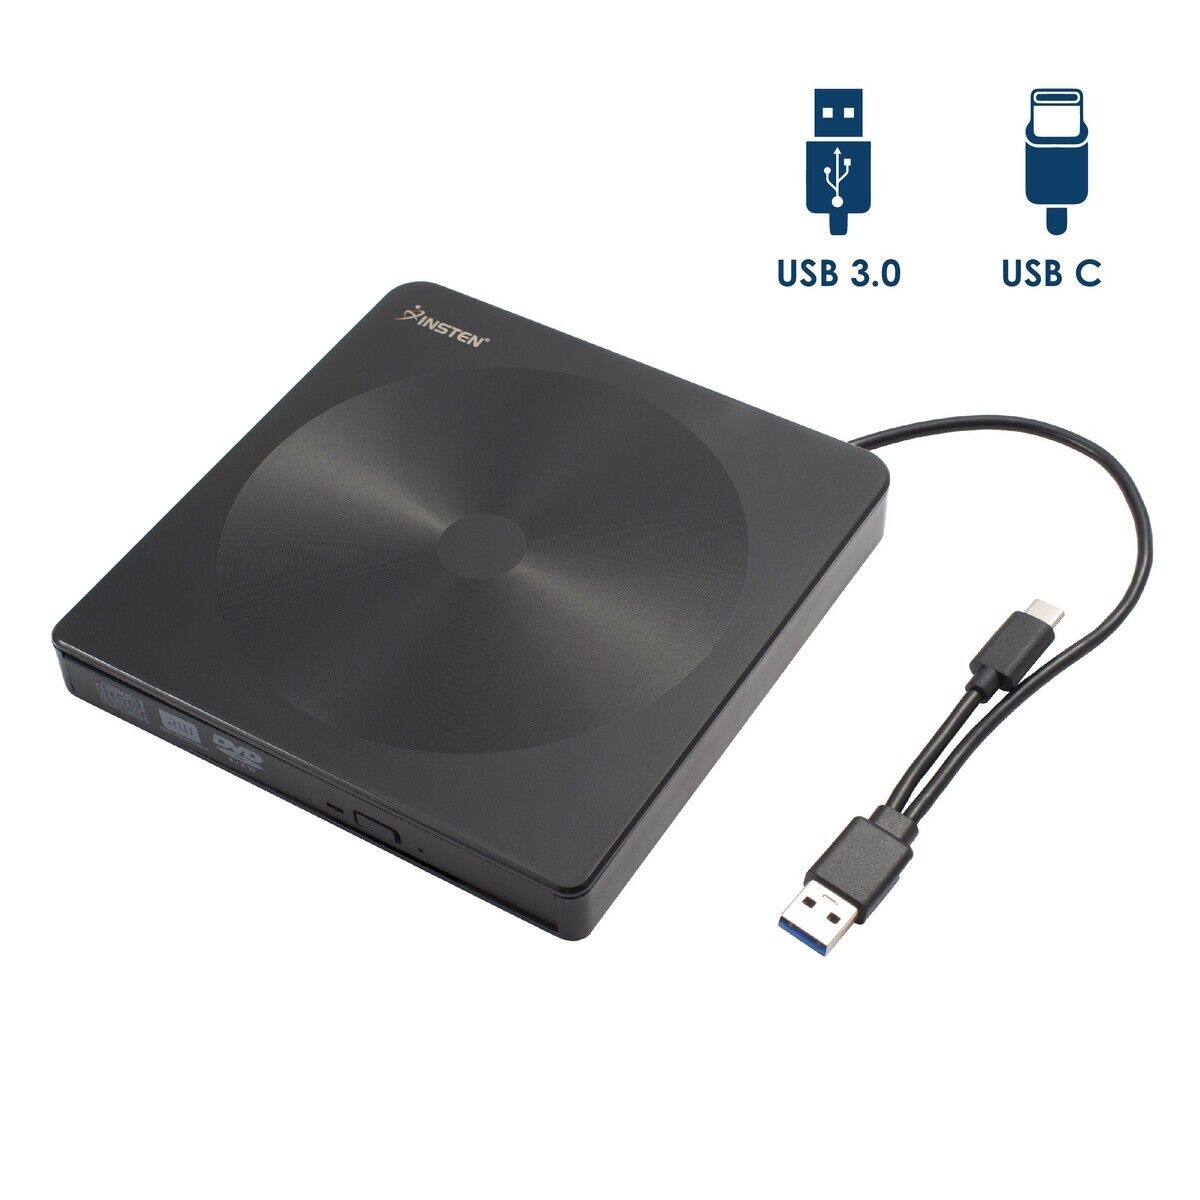 Portable External DVD Player Burner USB 3.0 with USB C Cable CD DVD Disc +/-RW